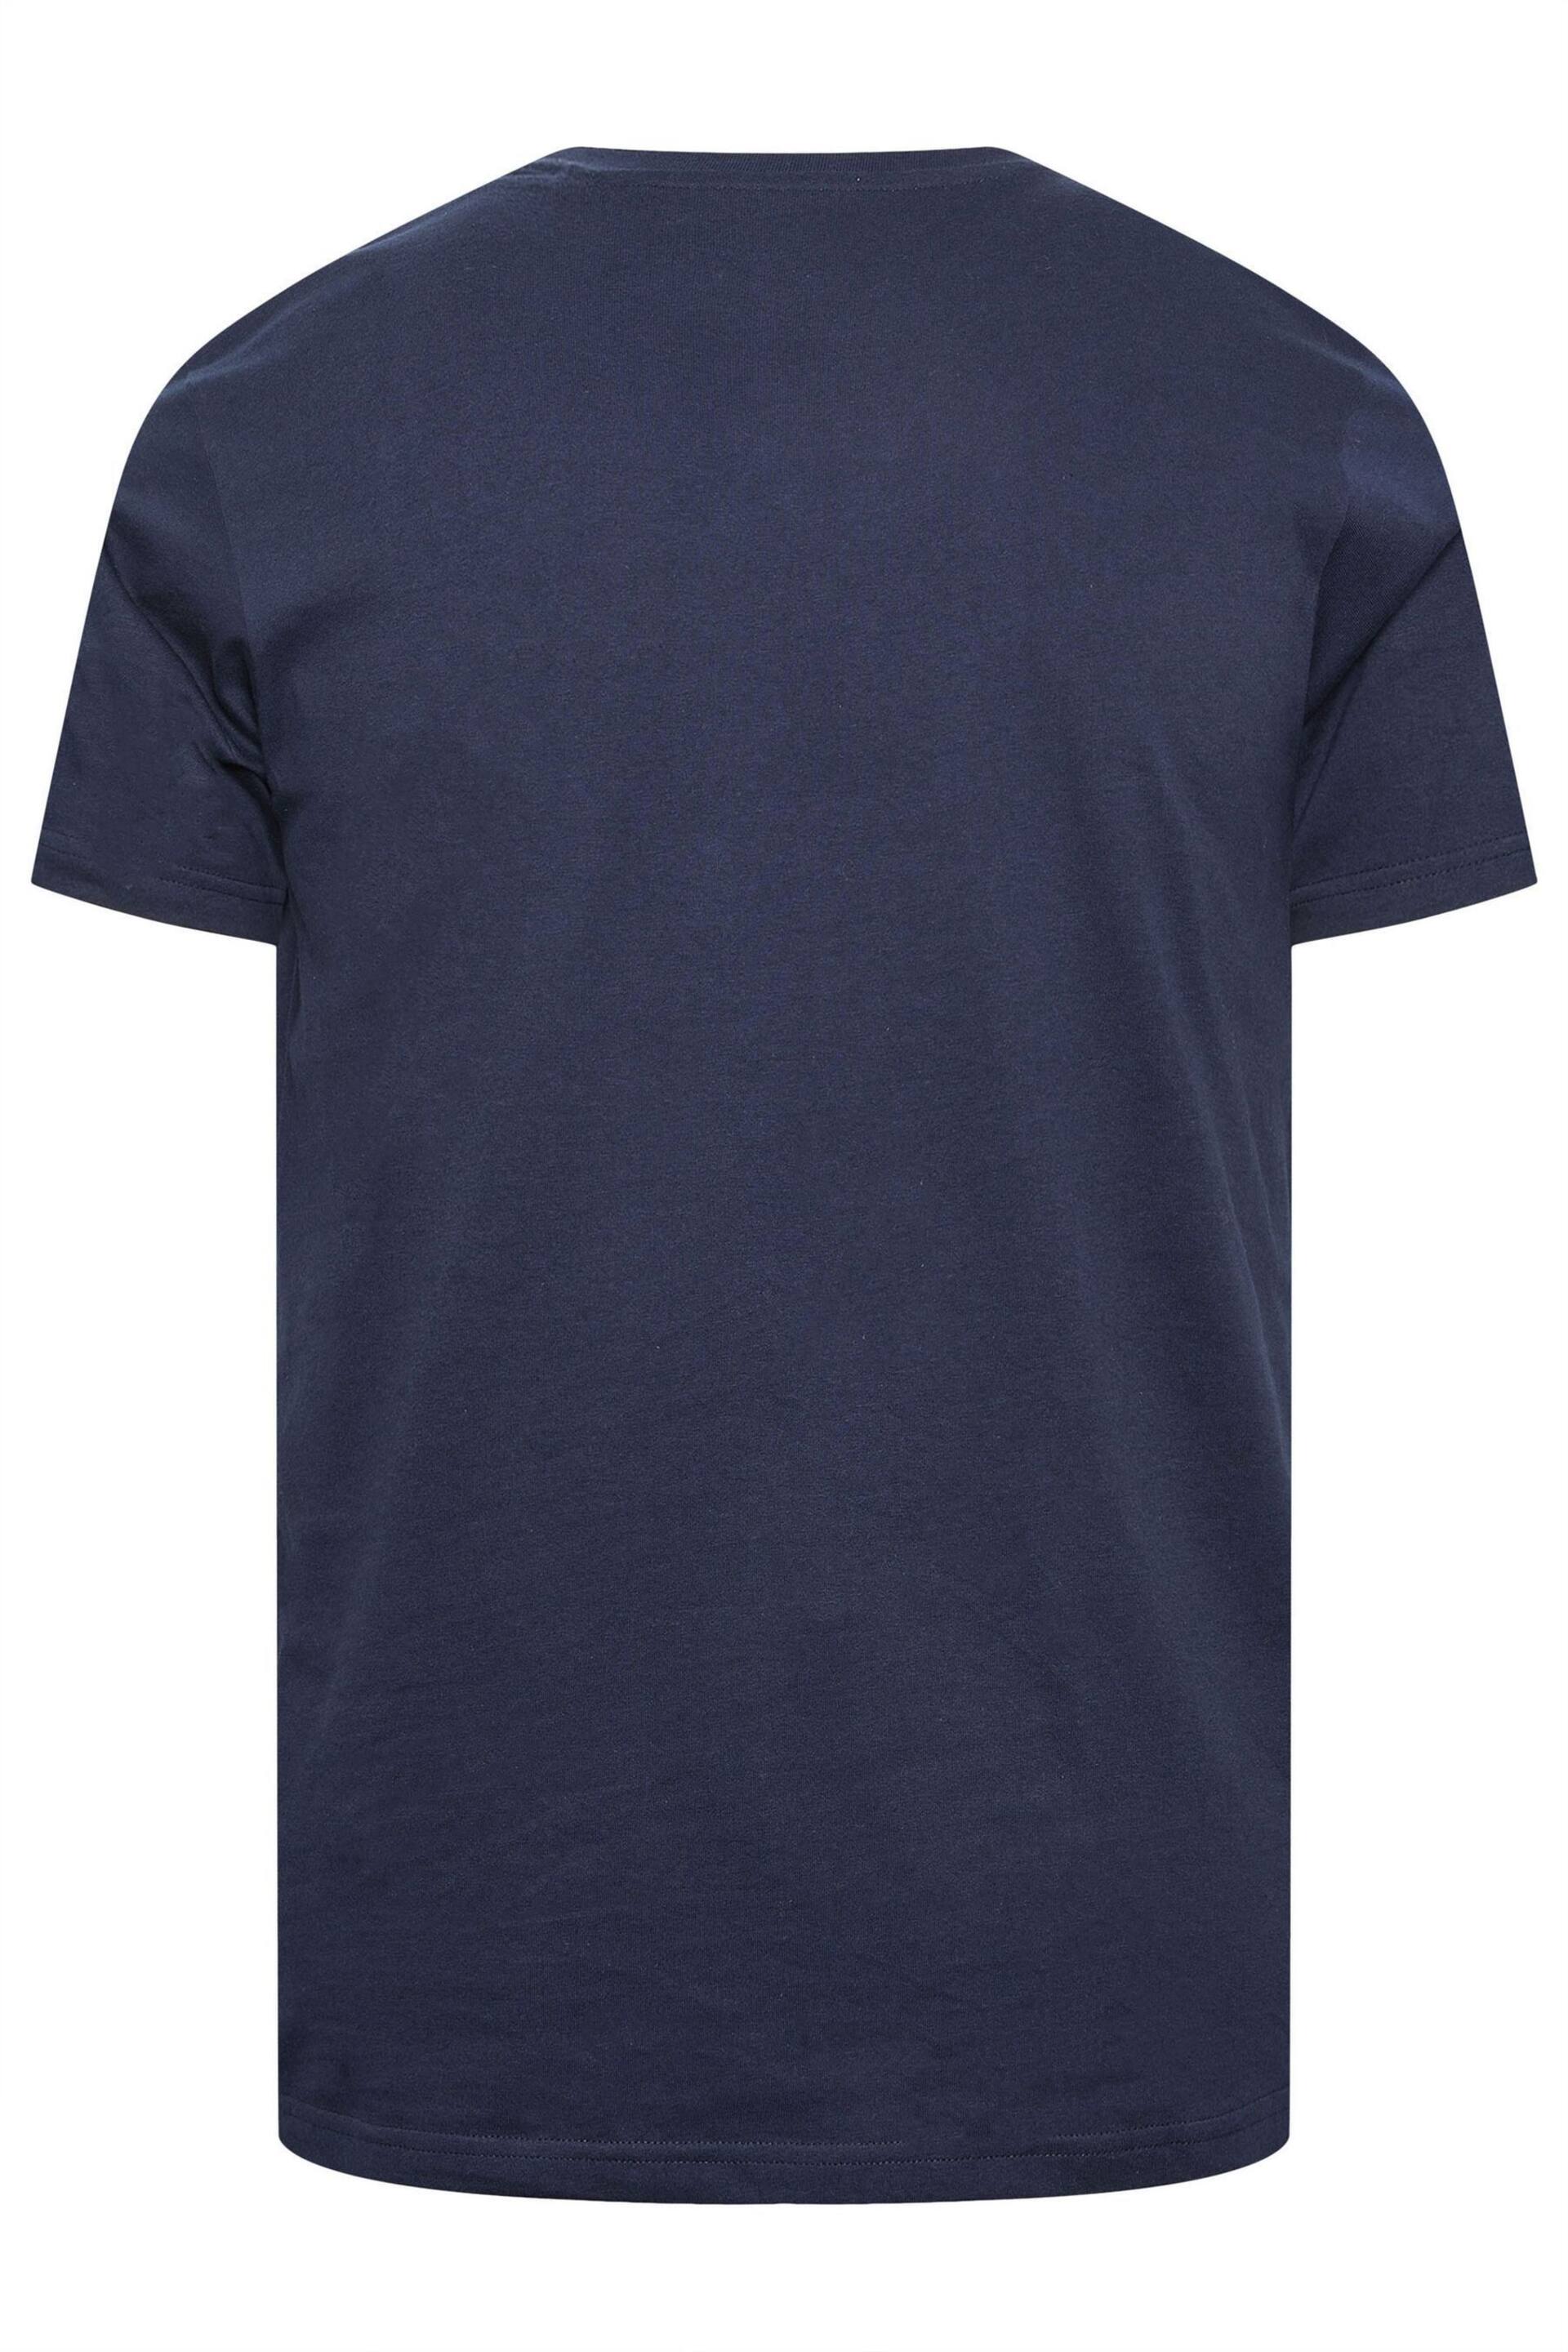 BadRhino Big & Tall Navy Blue Car Print T-Shirt - Image 3 of 3